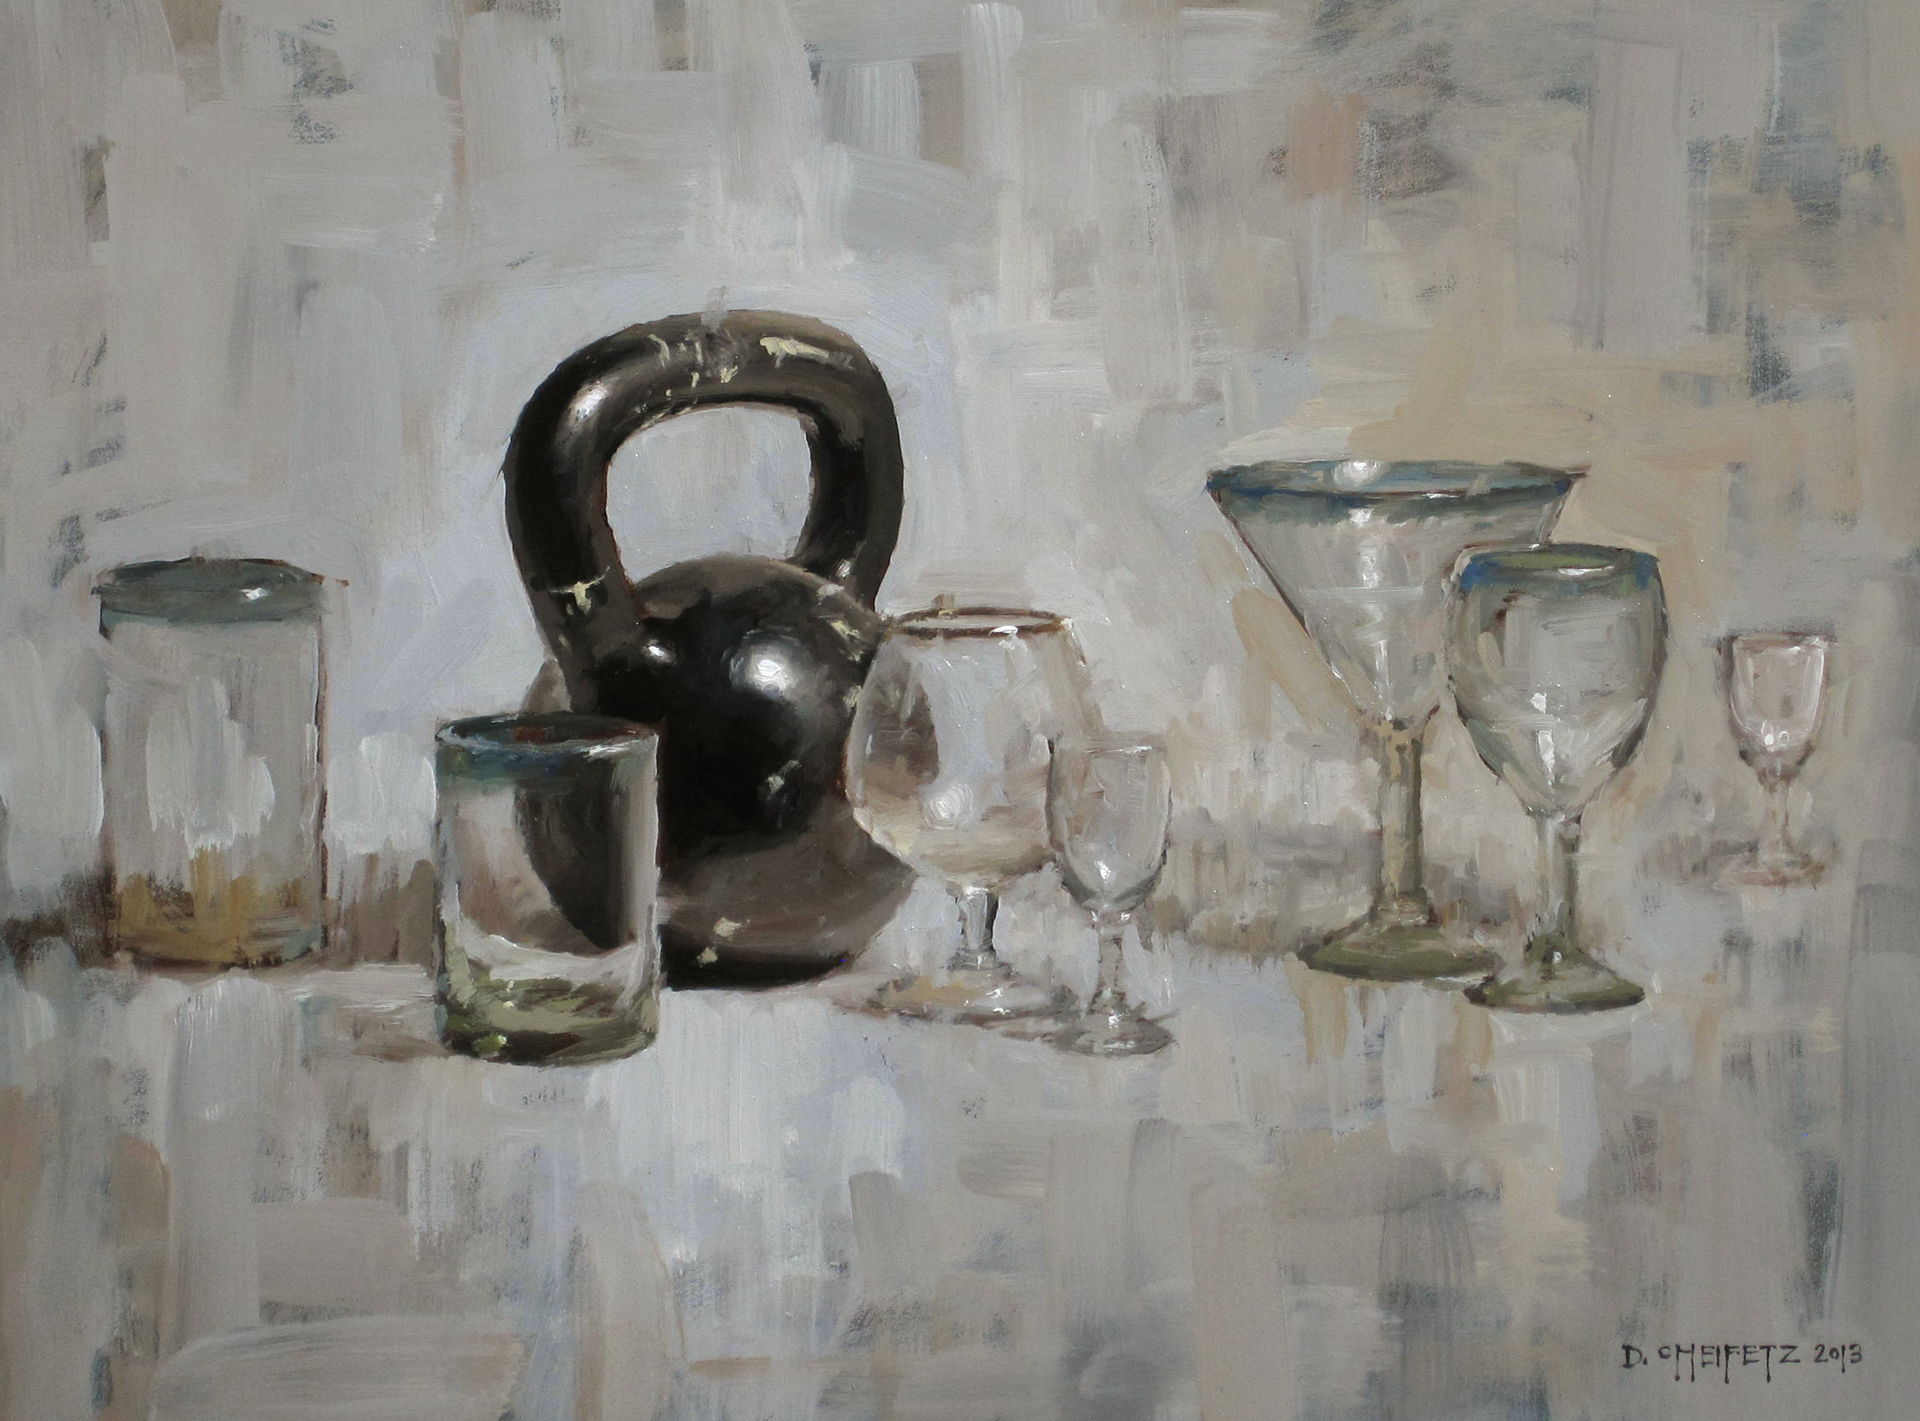 Iron and Glass by David Cheifetz